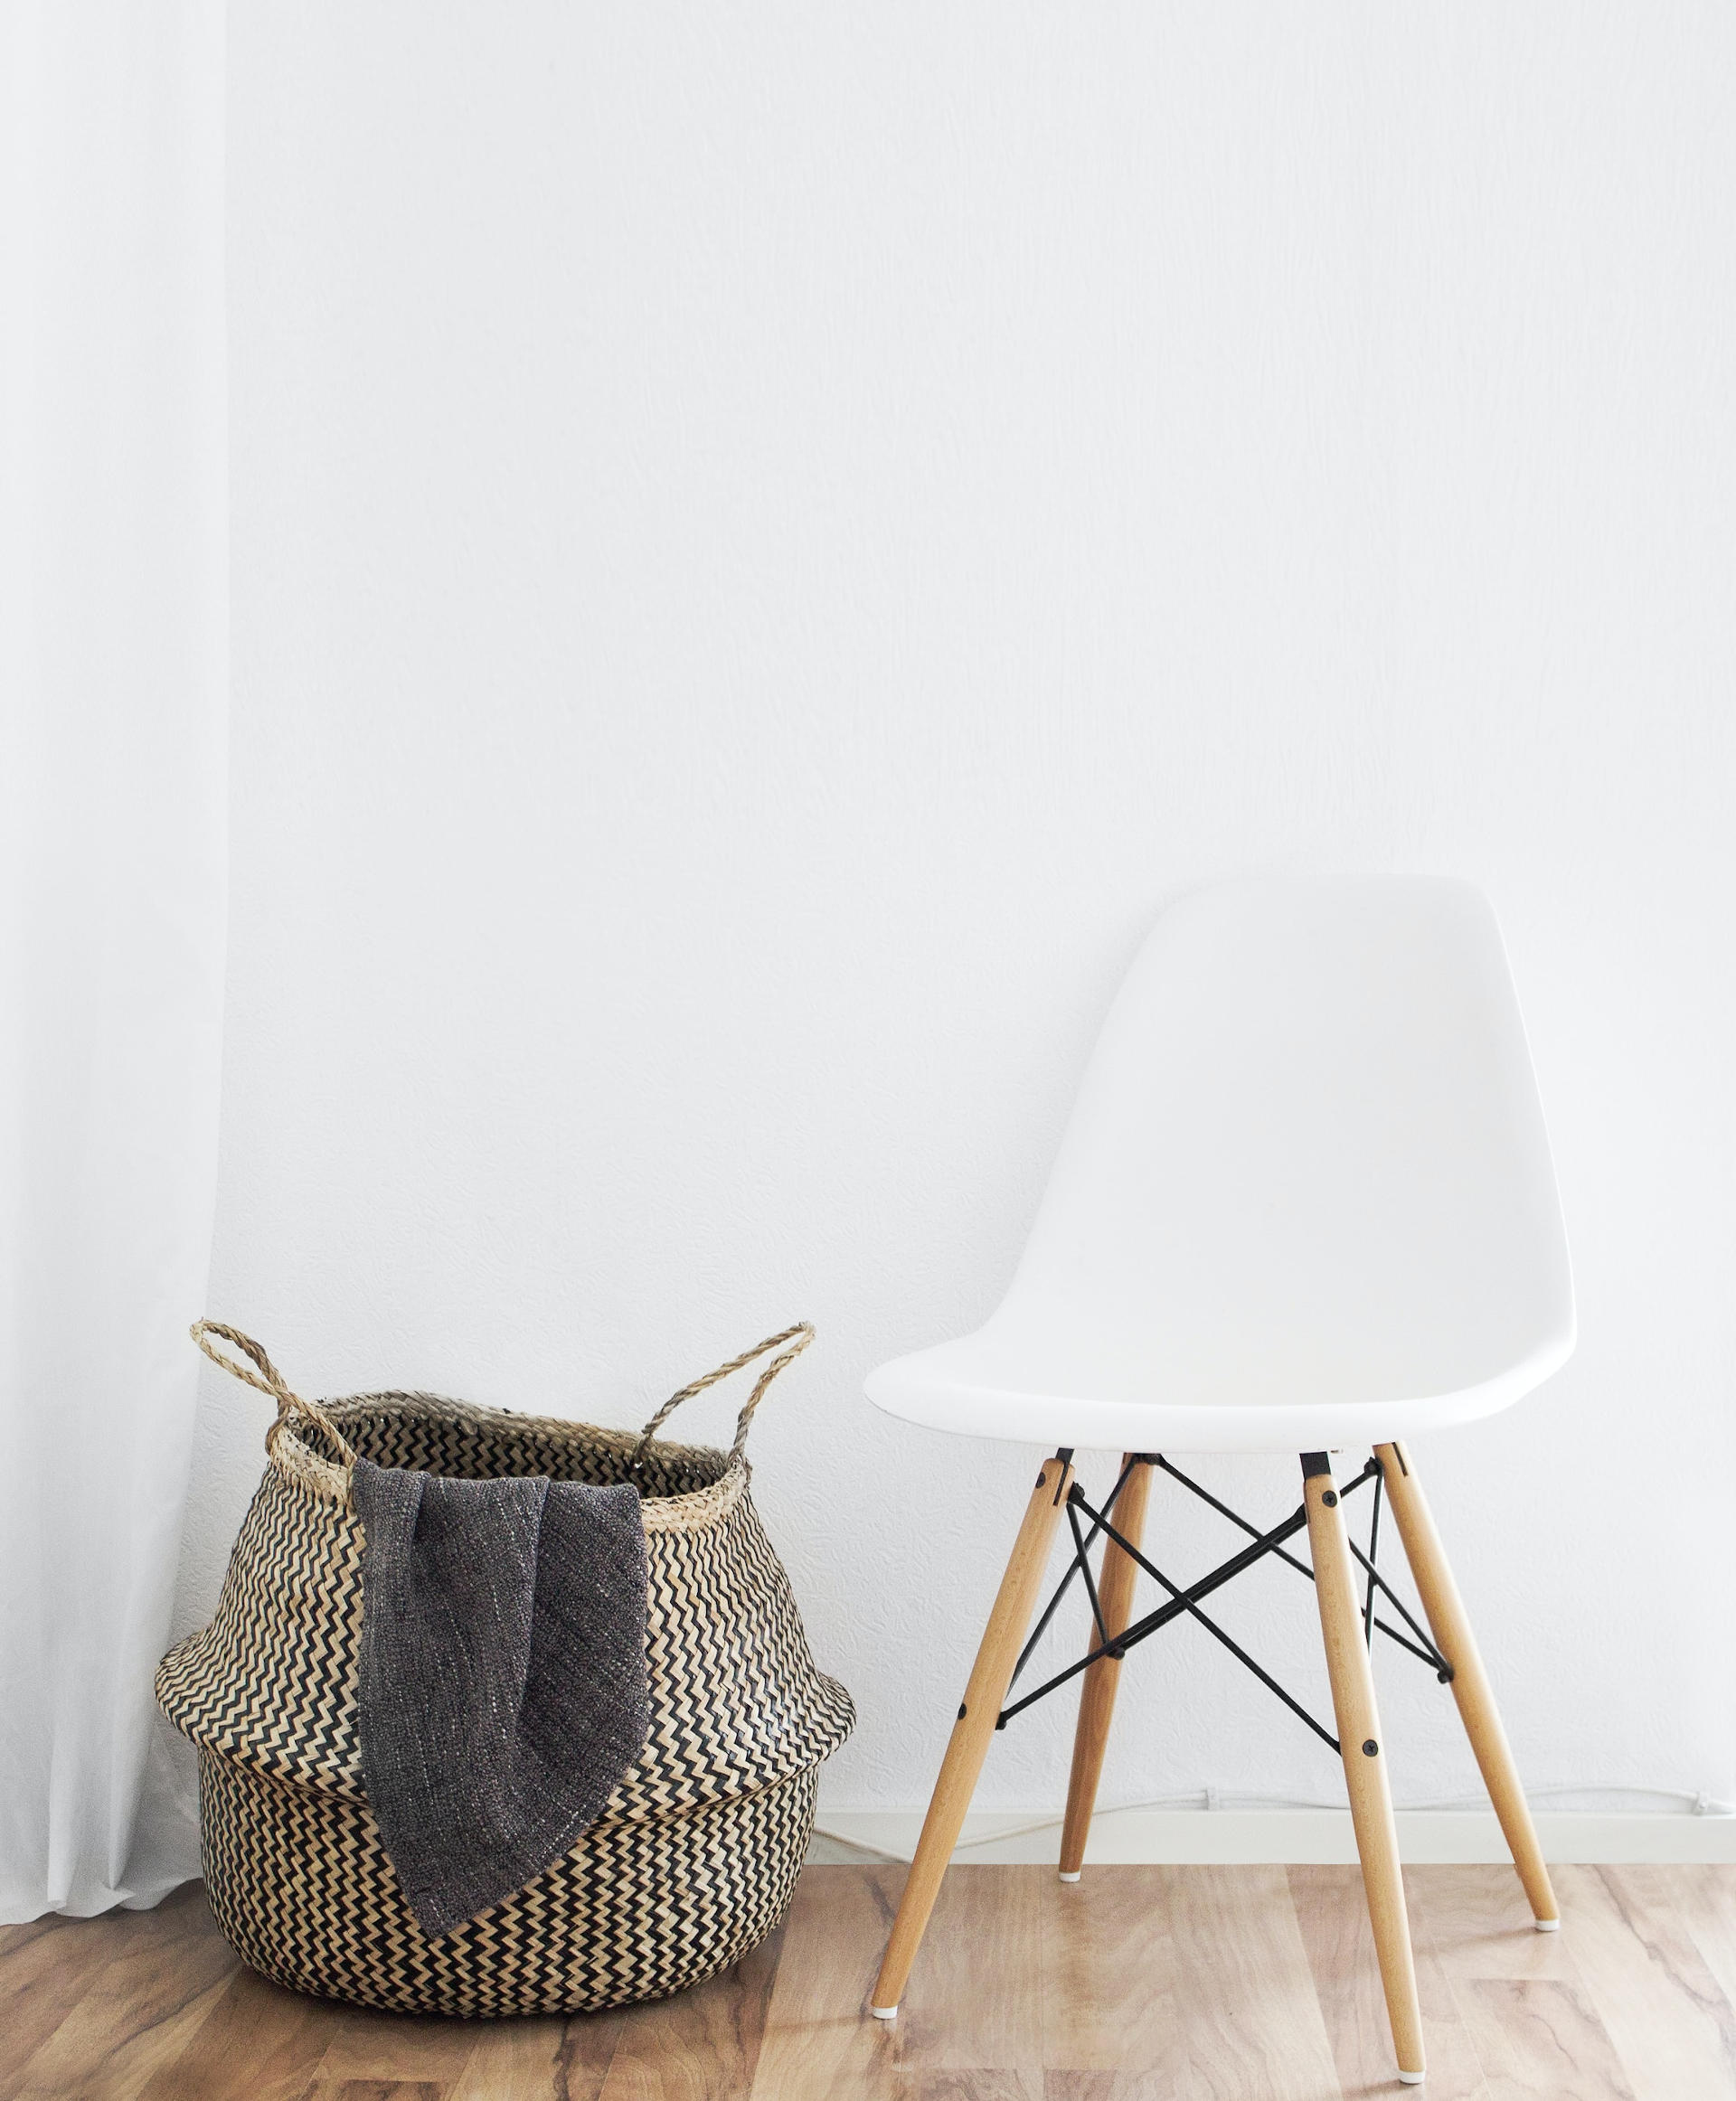 Minimalist chair and basket